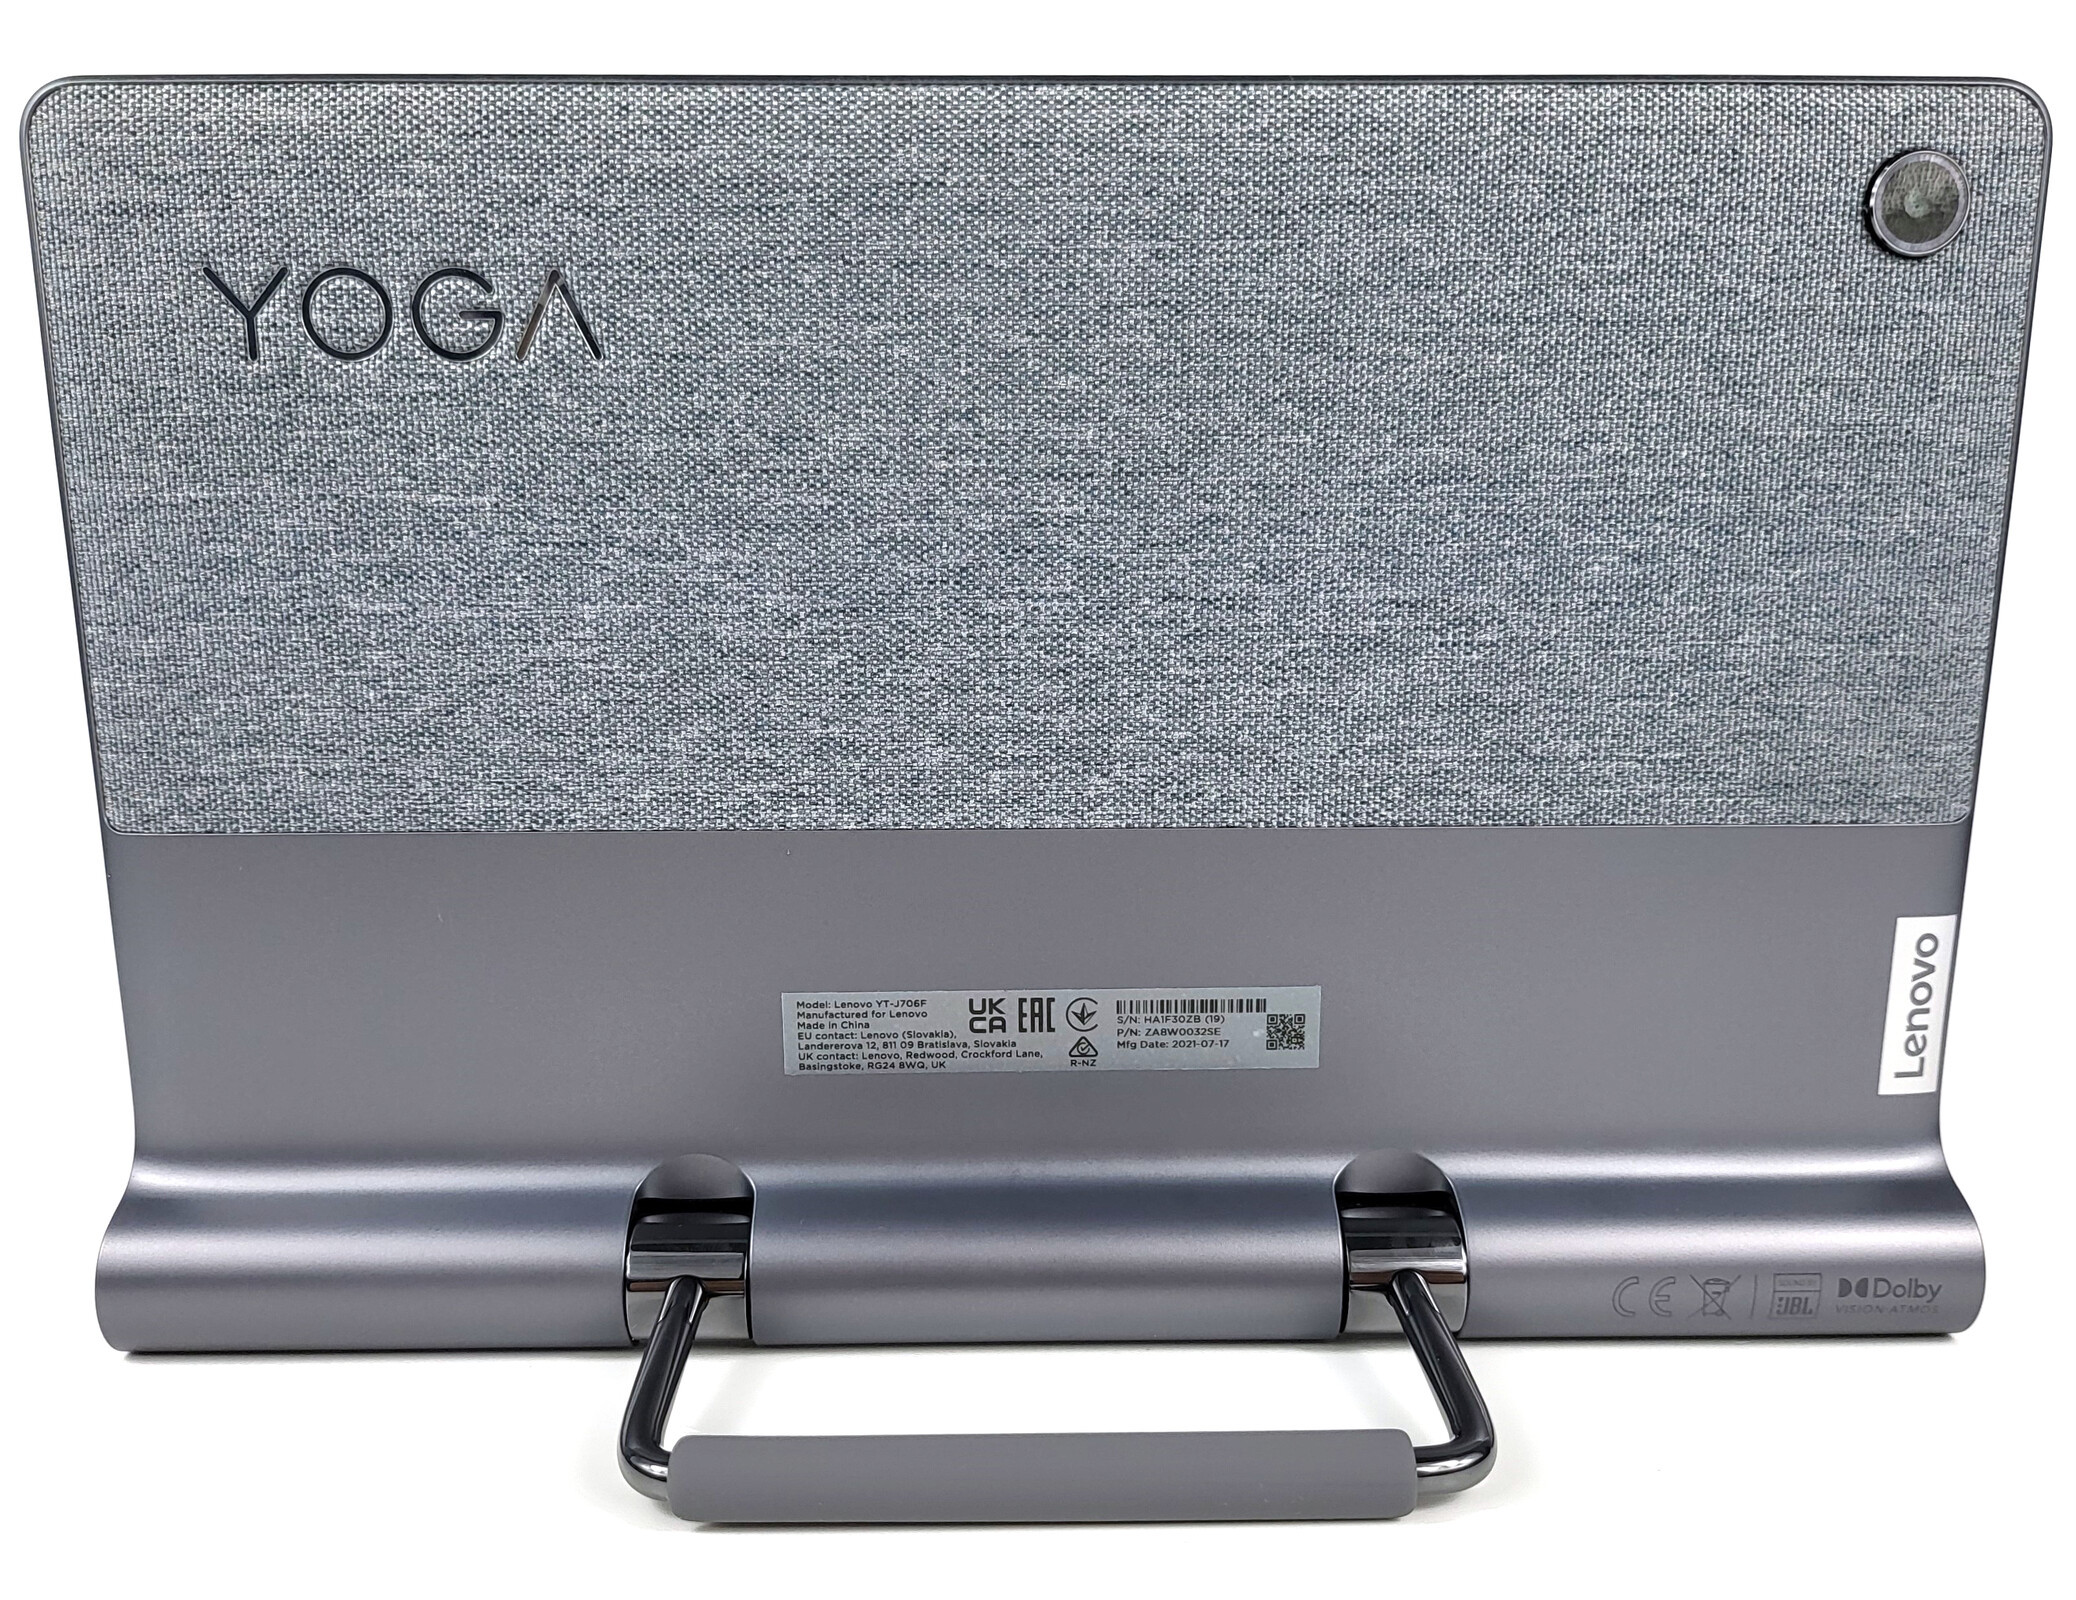 Lenovo unveils new Yoga Tablet